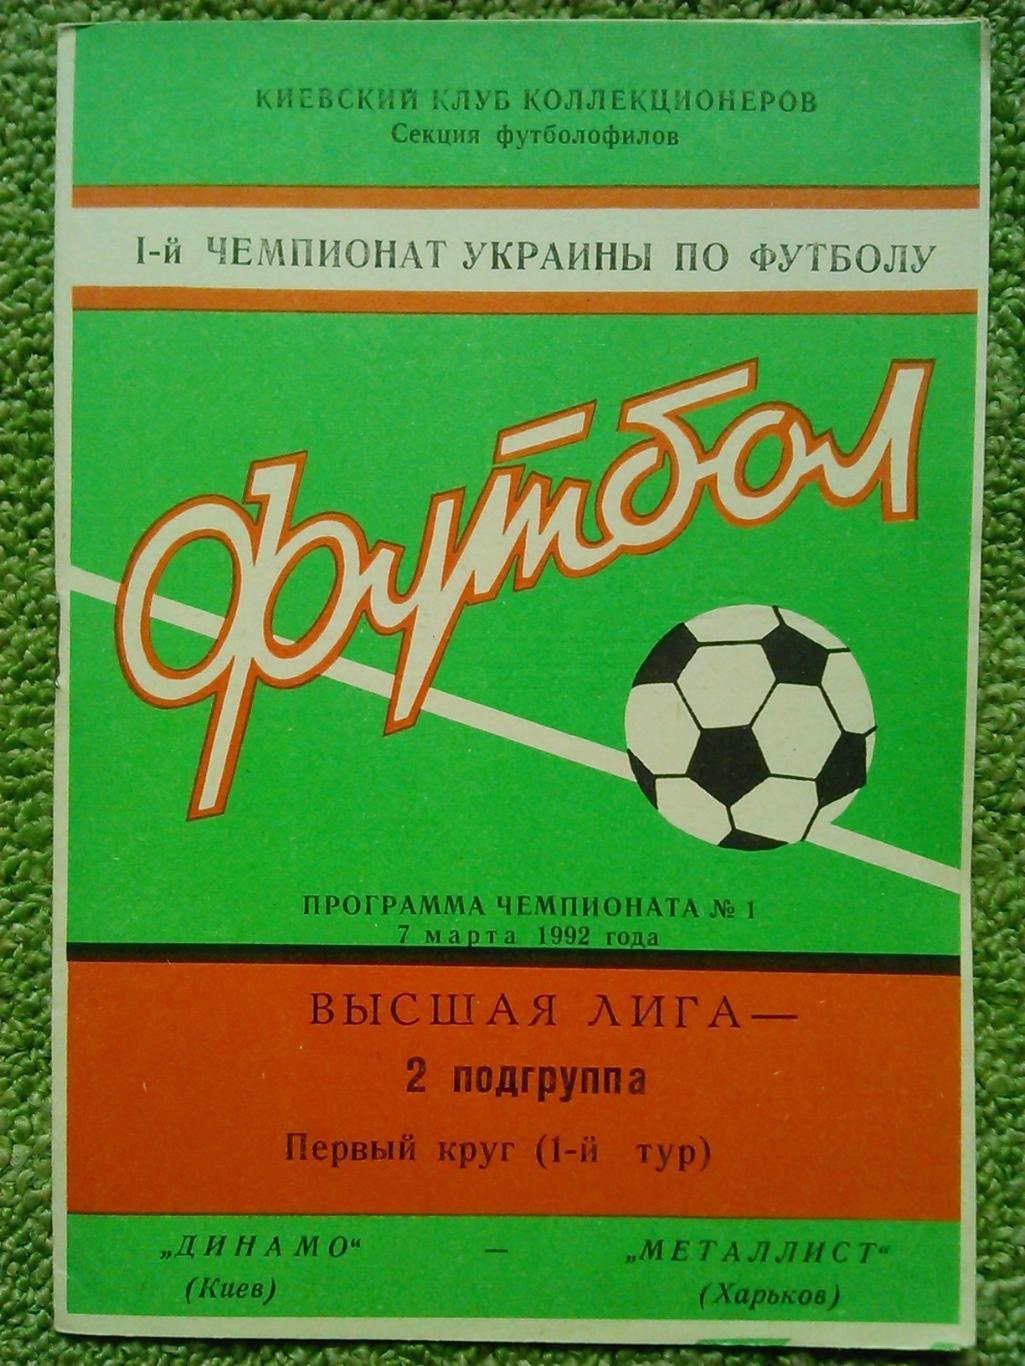 Динамо Киев - Металлист Харьков 7.03.1992